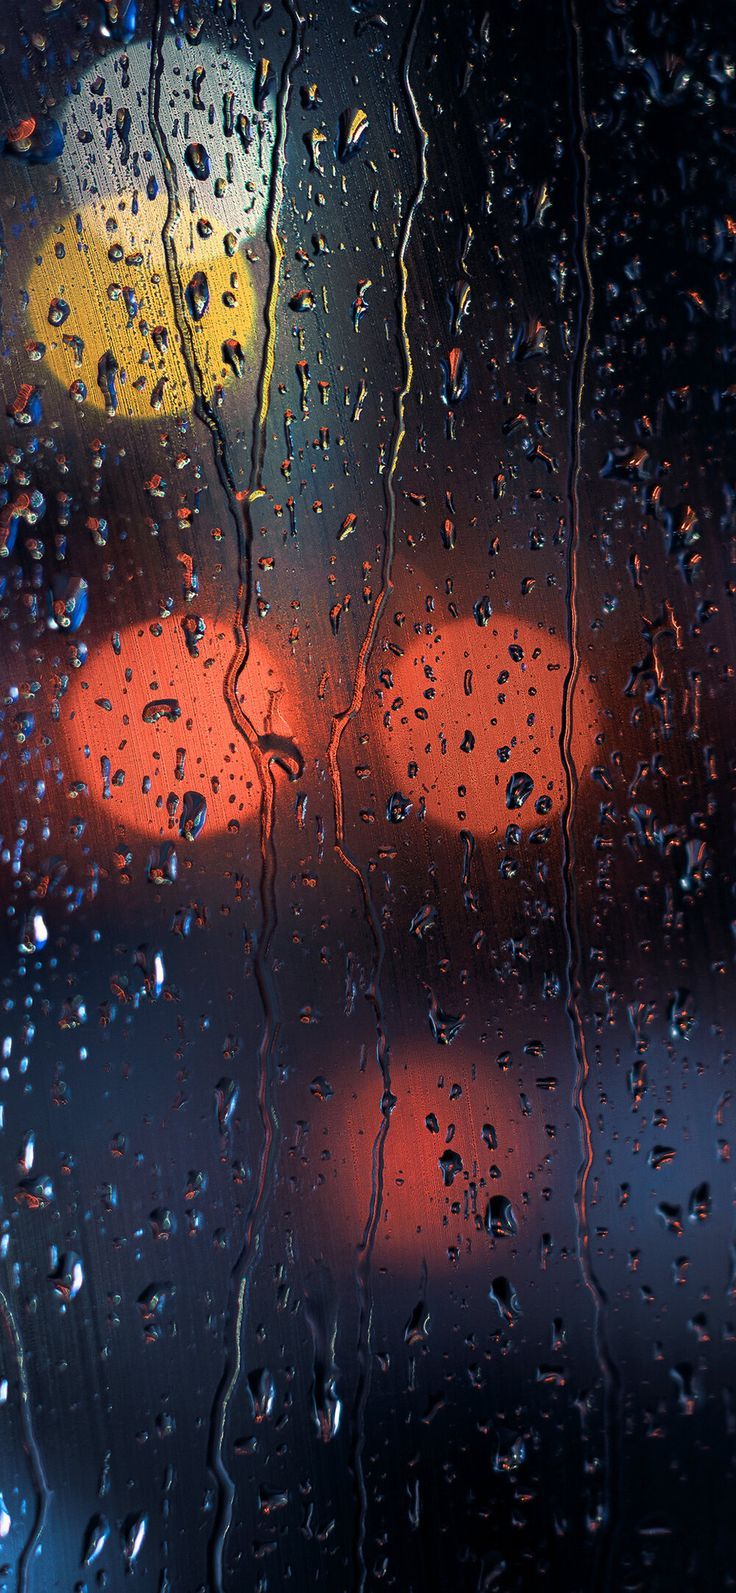  Regen Hintergrundbild 736x1593. Shinjuku Rain. Phone wallpaper, Rain wallpaper, Wallpaper